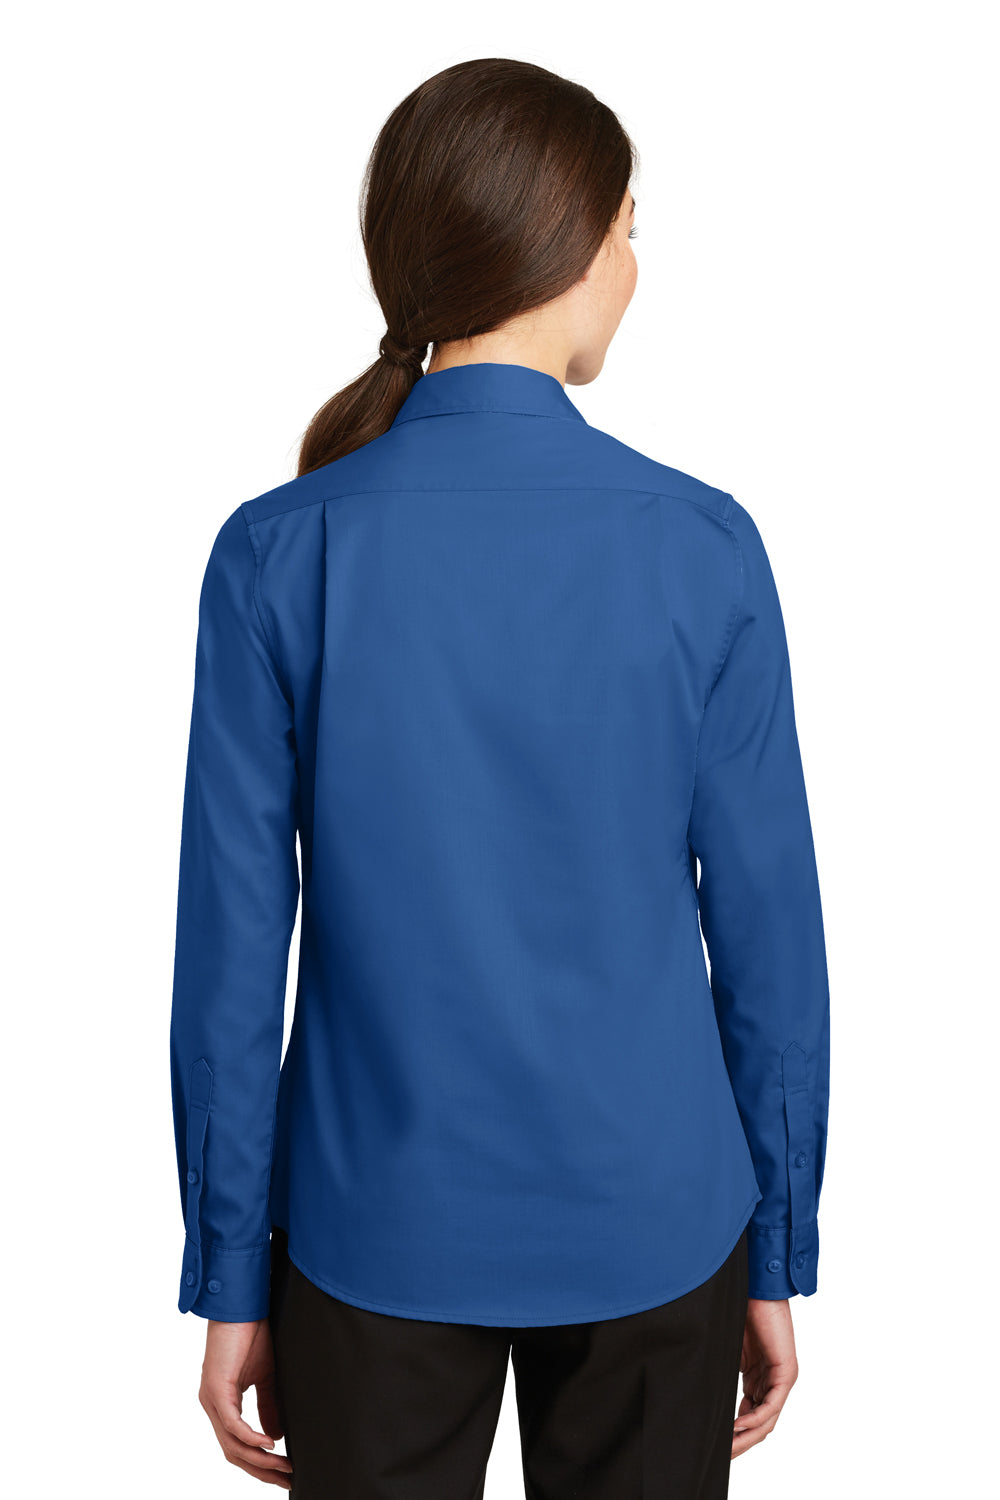 Port Authority L663 Womens SuperPro Wrinkle Resistant Long Sleeve Button Down Shirt Royal Blue Back